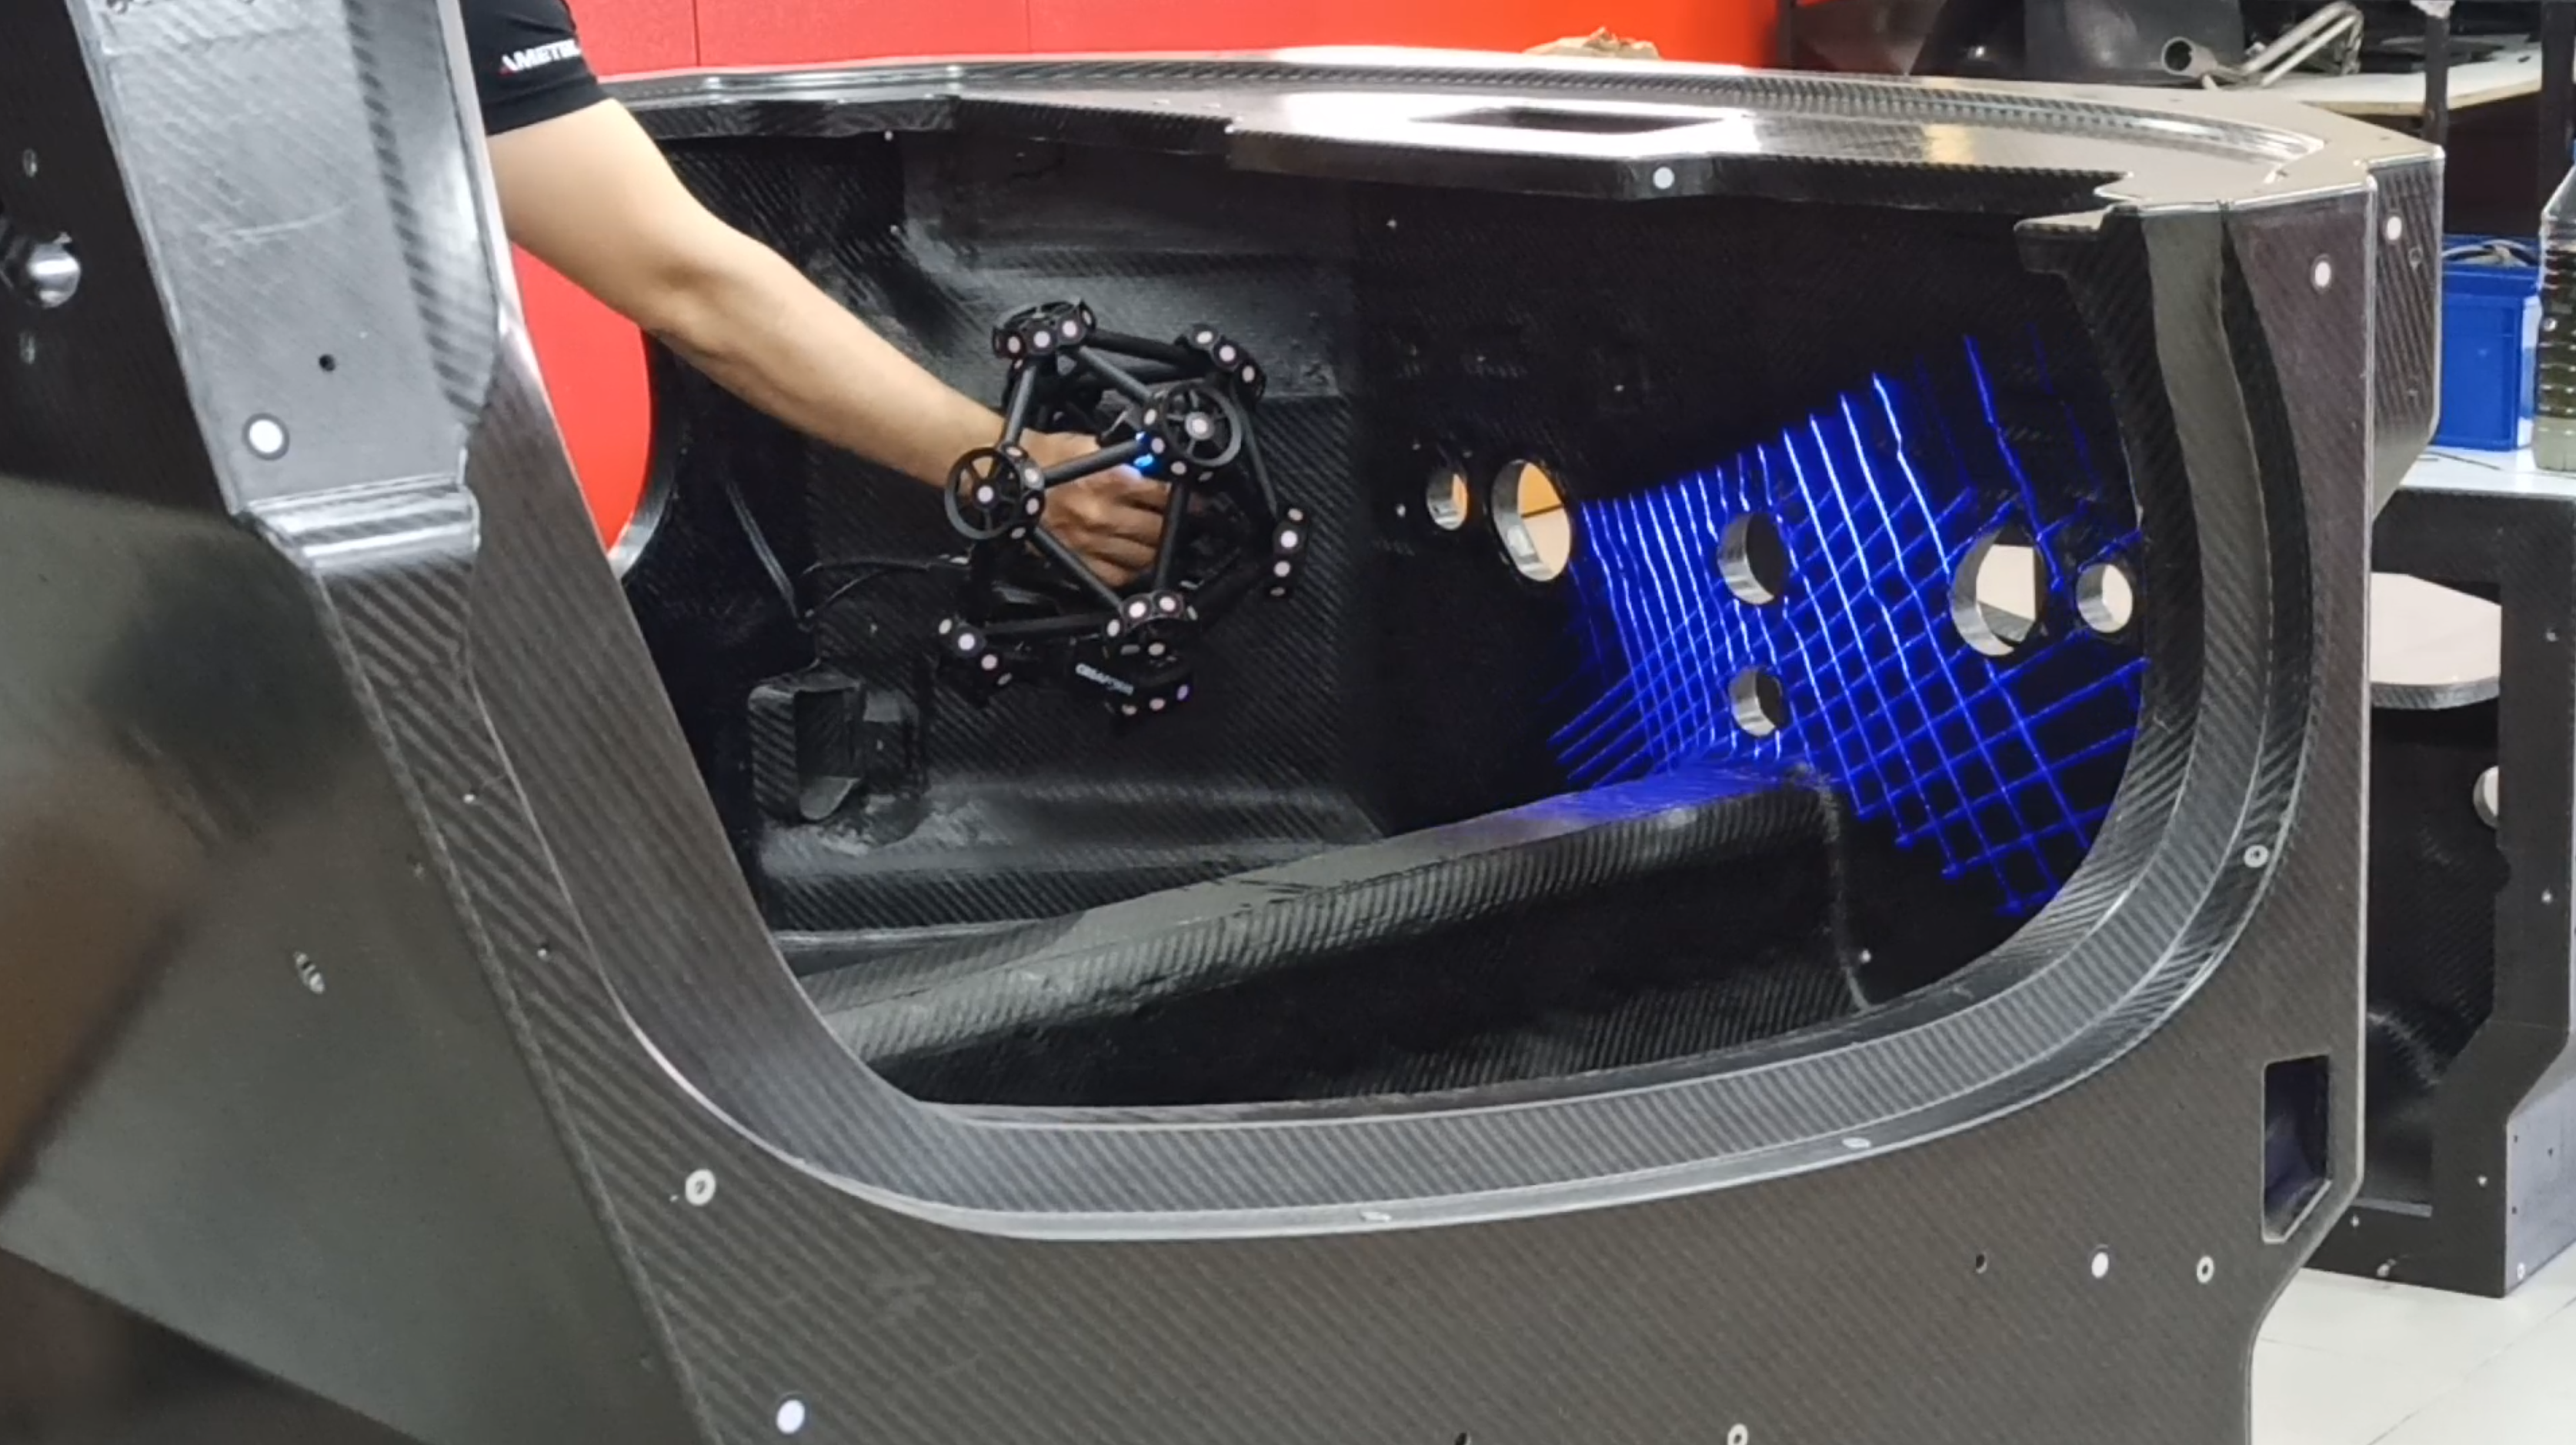 MetraSCAN 3D is scanning carbon fiber car parts.